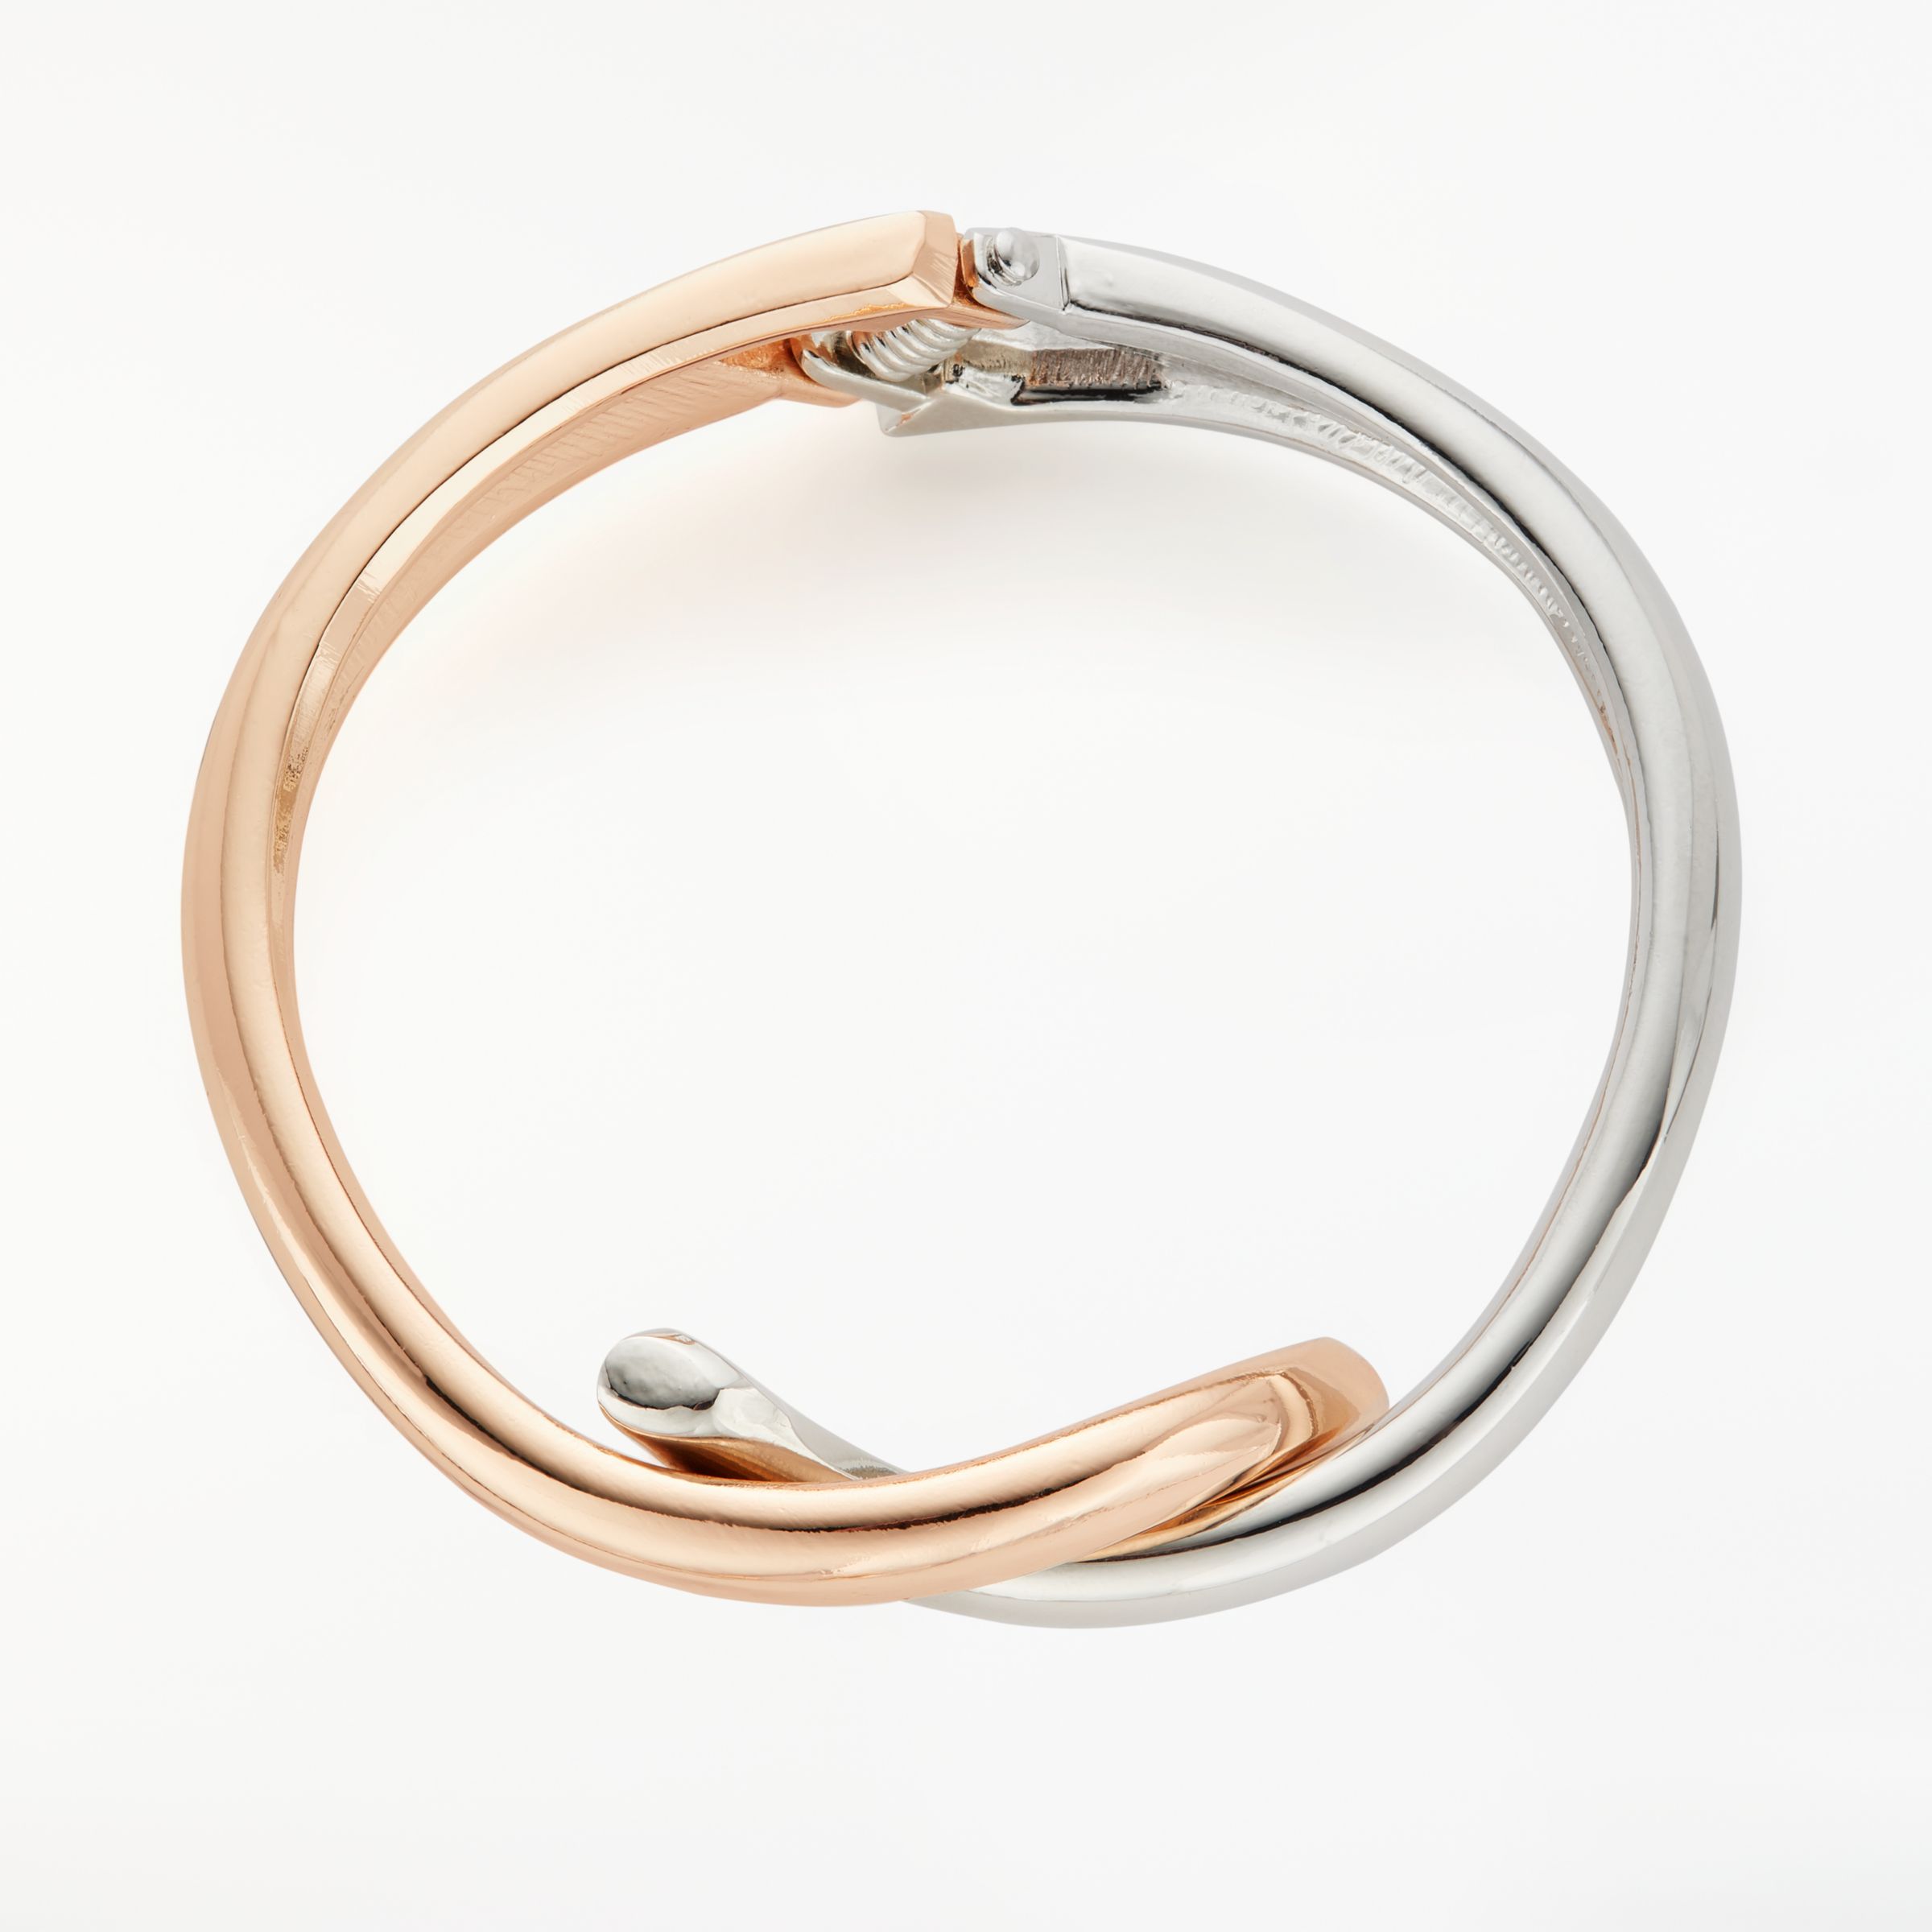 John Lewis & Partners Hinged Knot Bracelet, Rose Gold/Silver